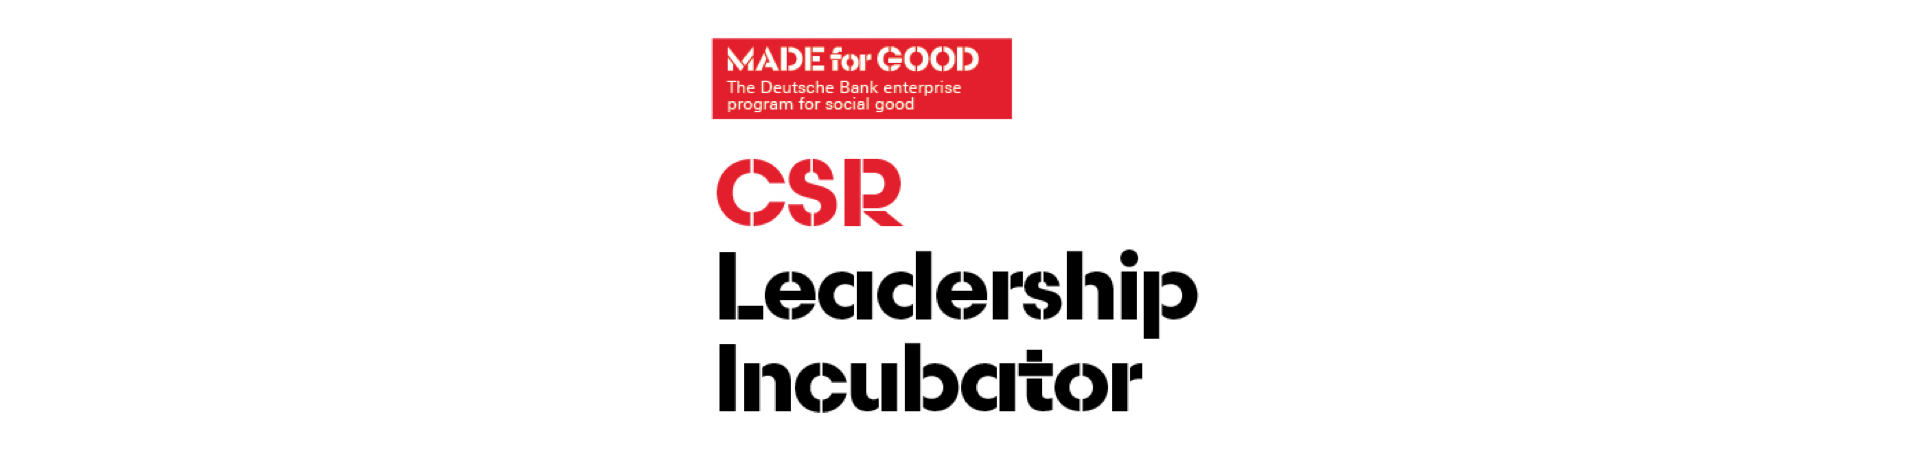 CSR Leadership Incubator